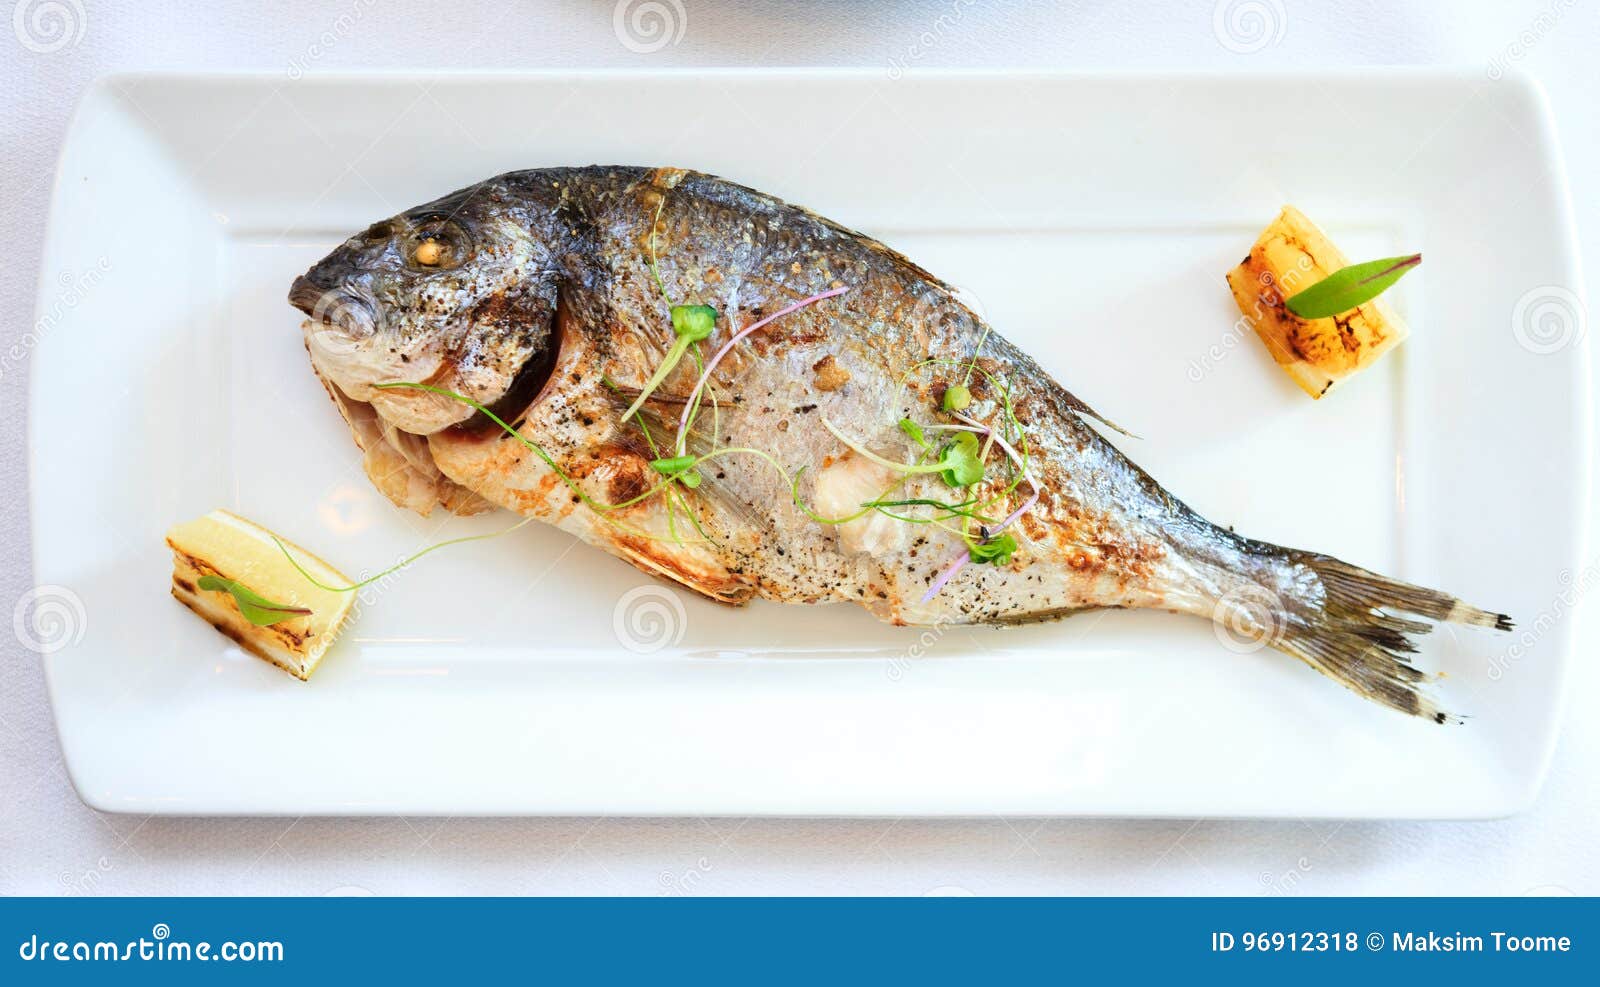 grilled dorada fish